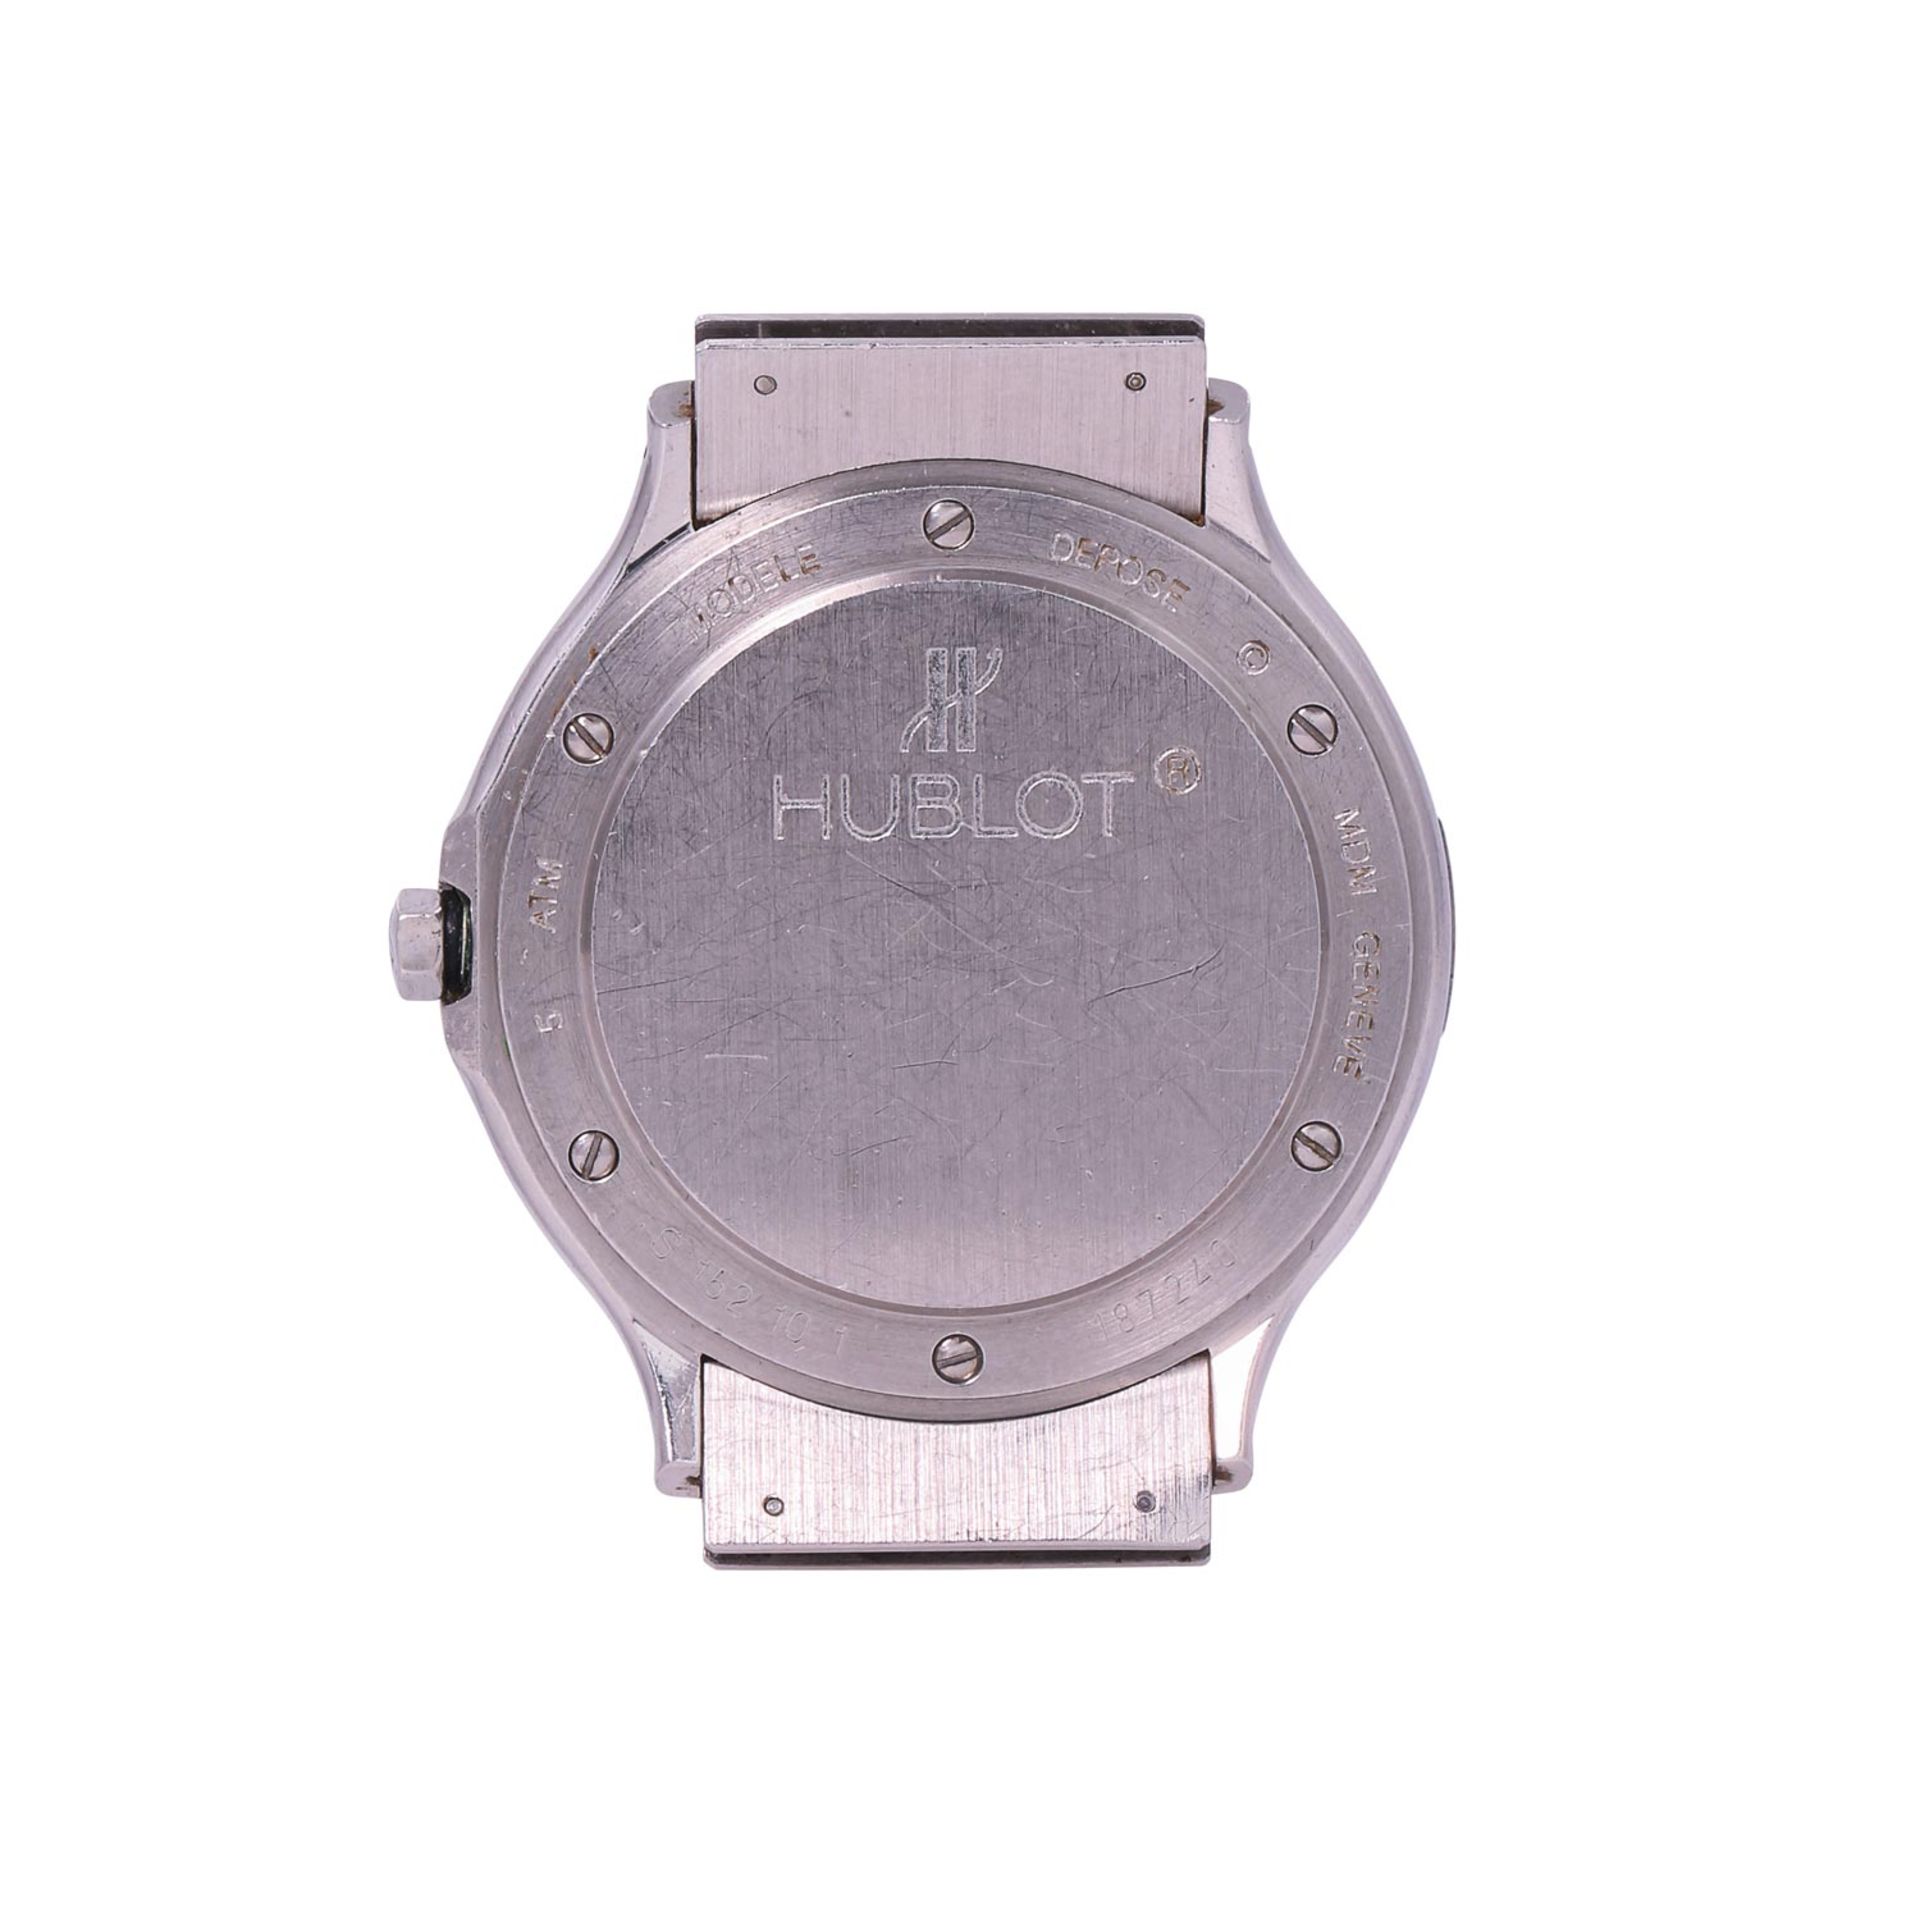 HUBLOT Neo Vintage MDM Geneve, Ref. S.152.10.1, Armbanduhr. Ca. 1990er Jahre. - Bild 2 aus 7